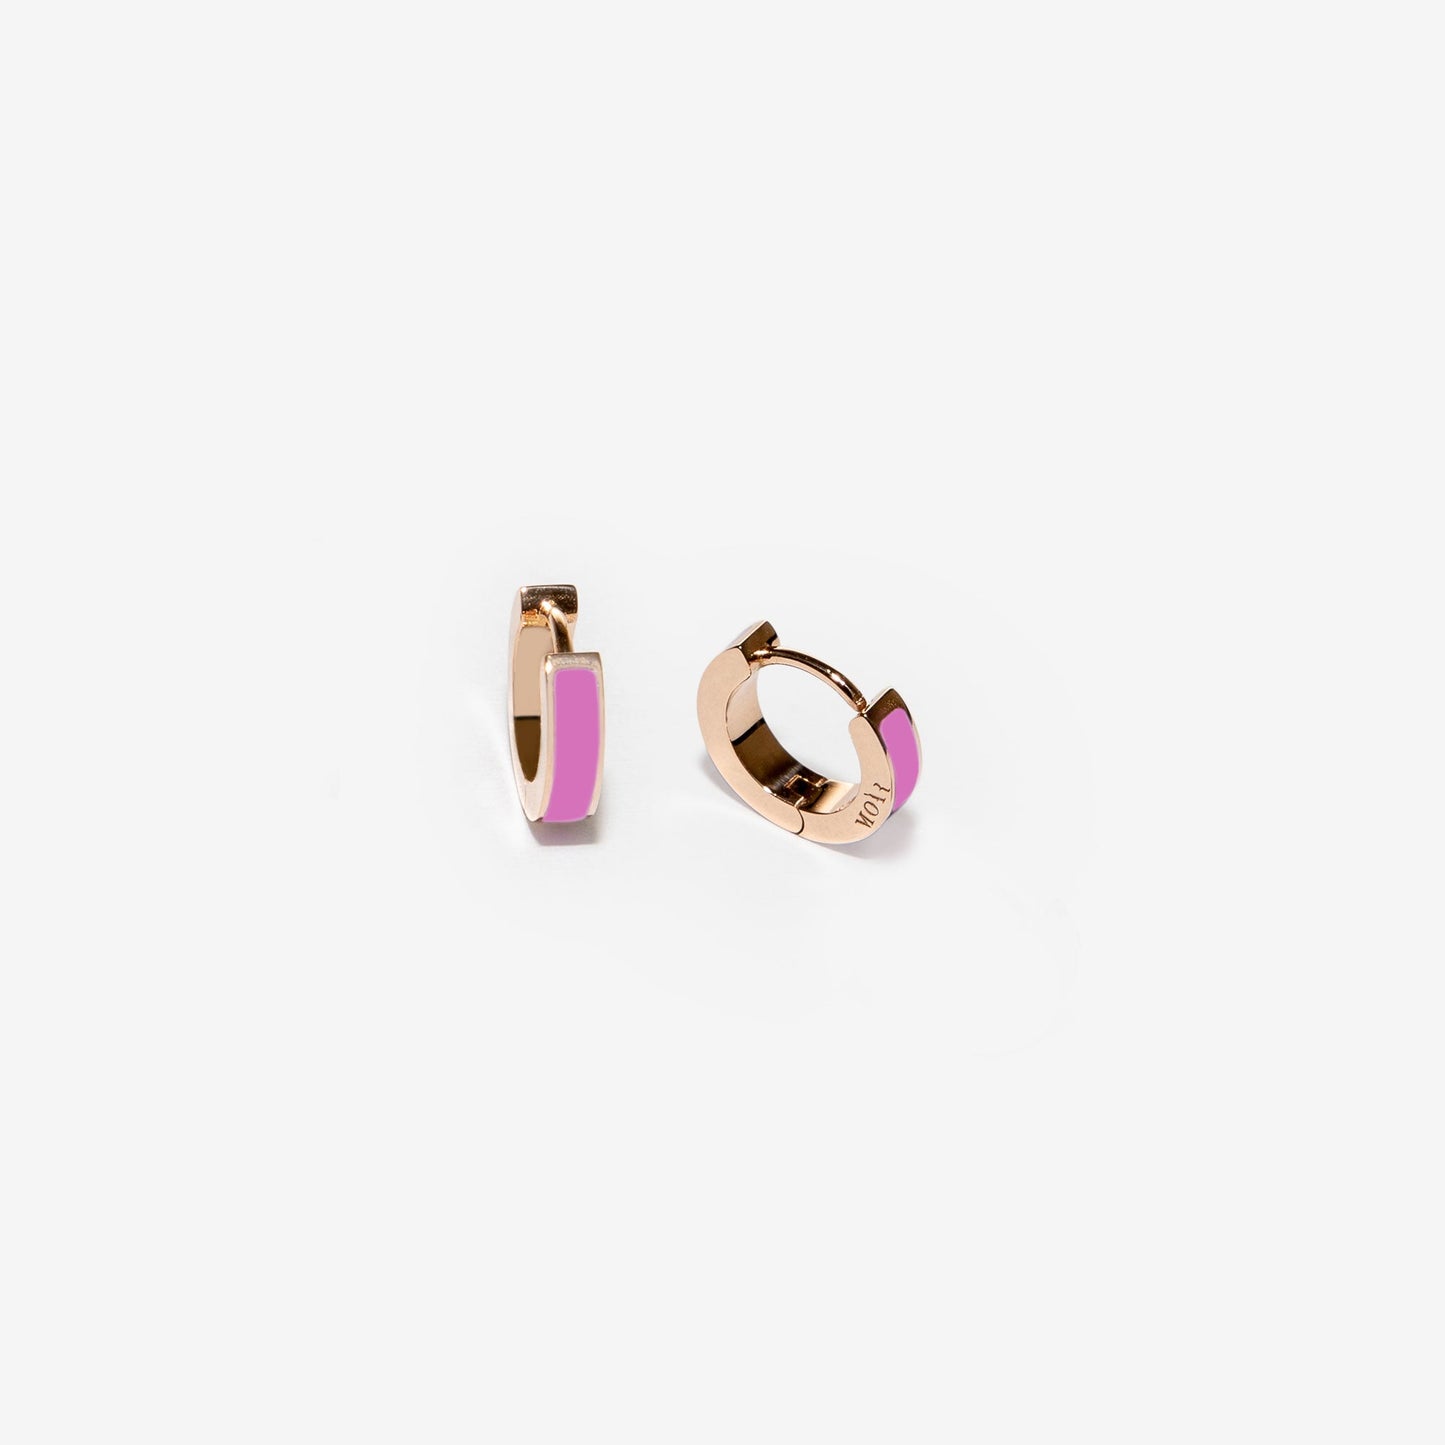 Inside light pink earrings